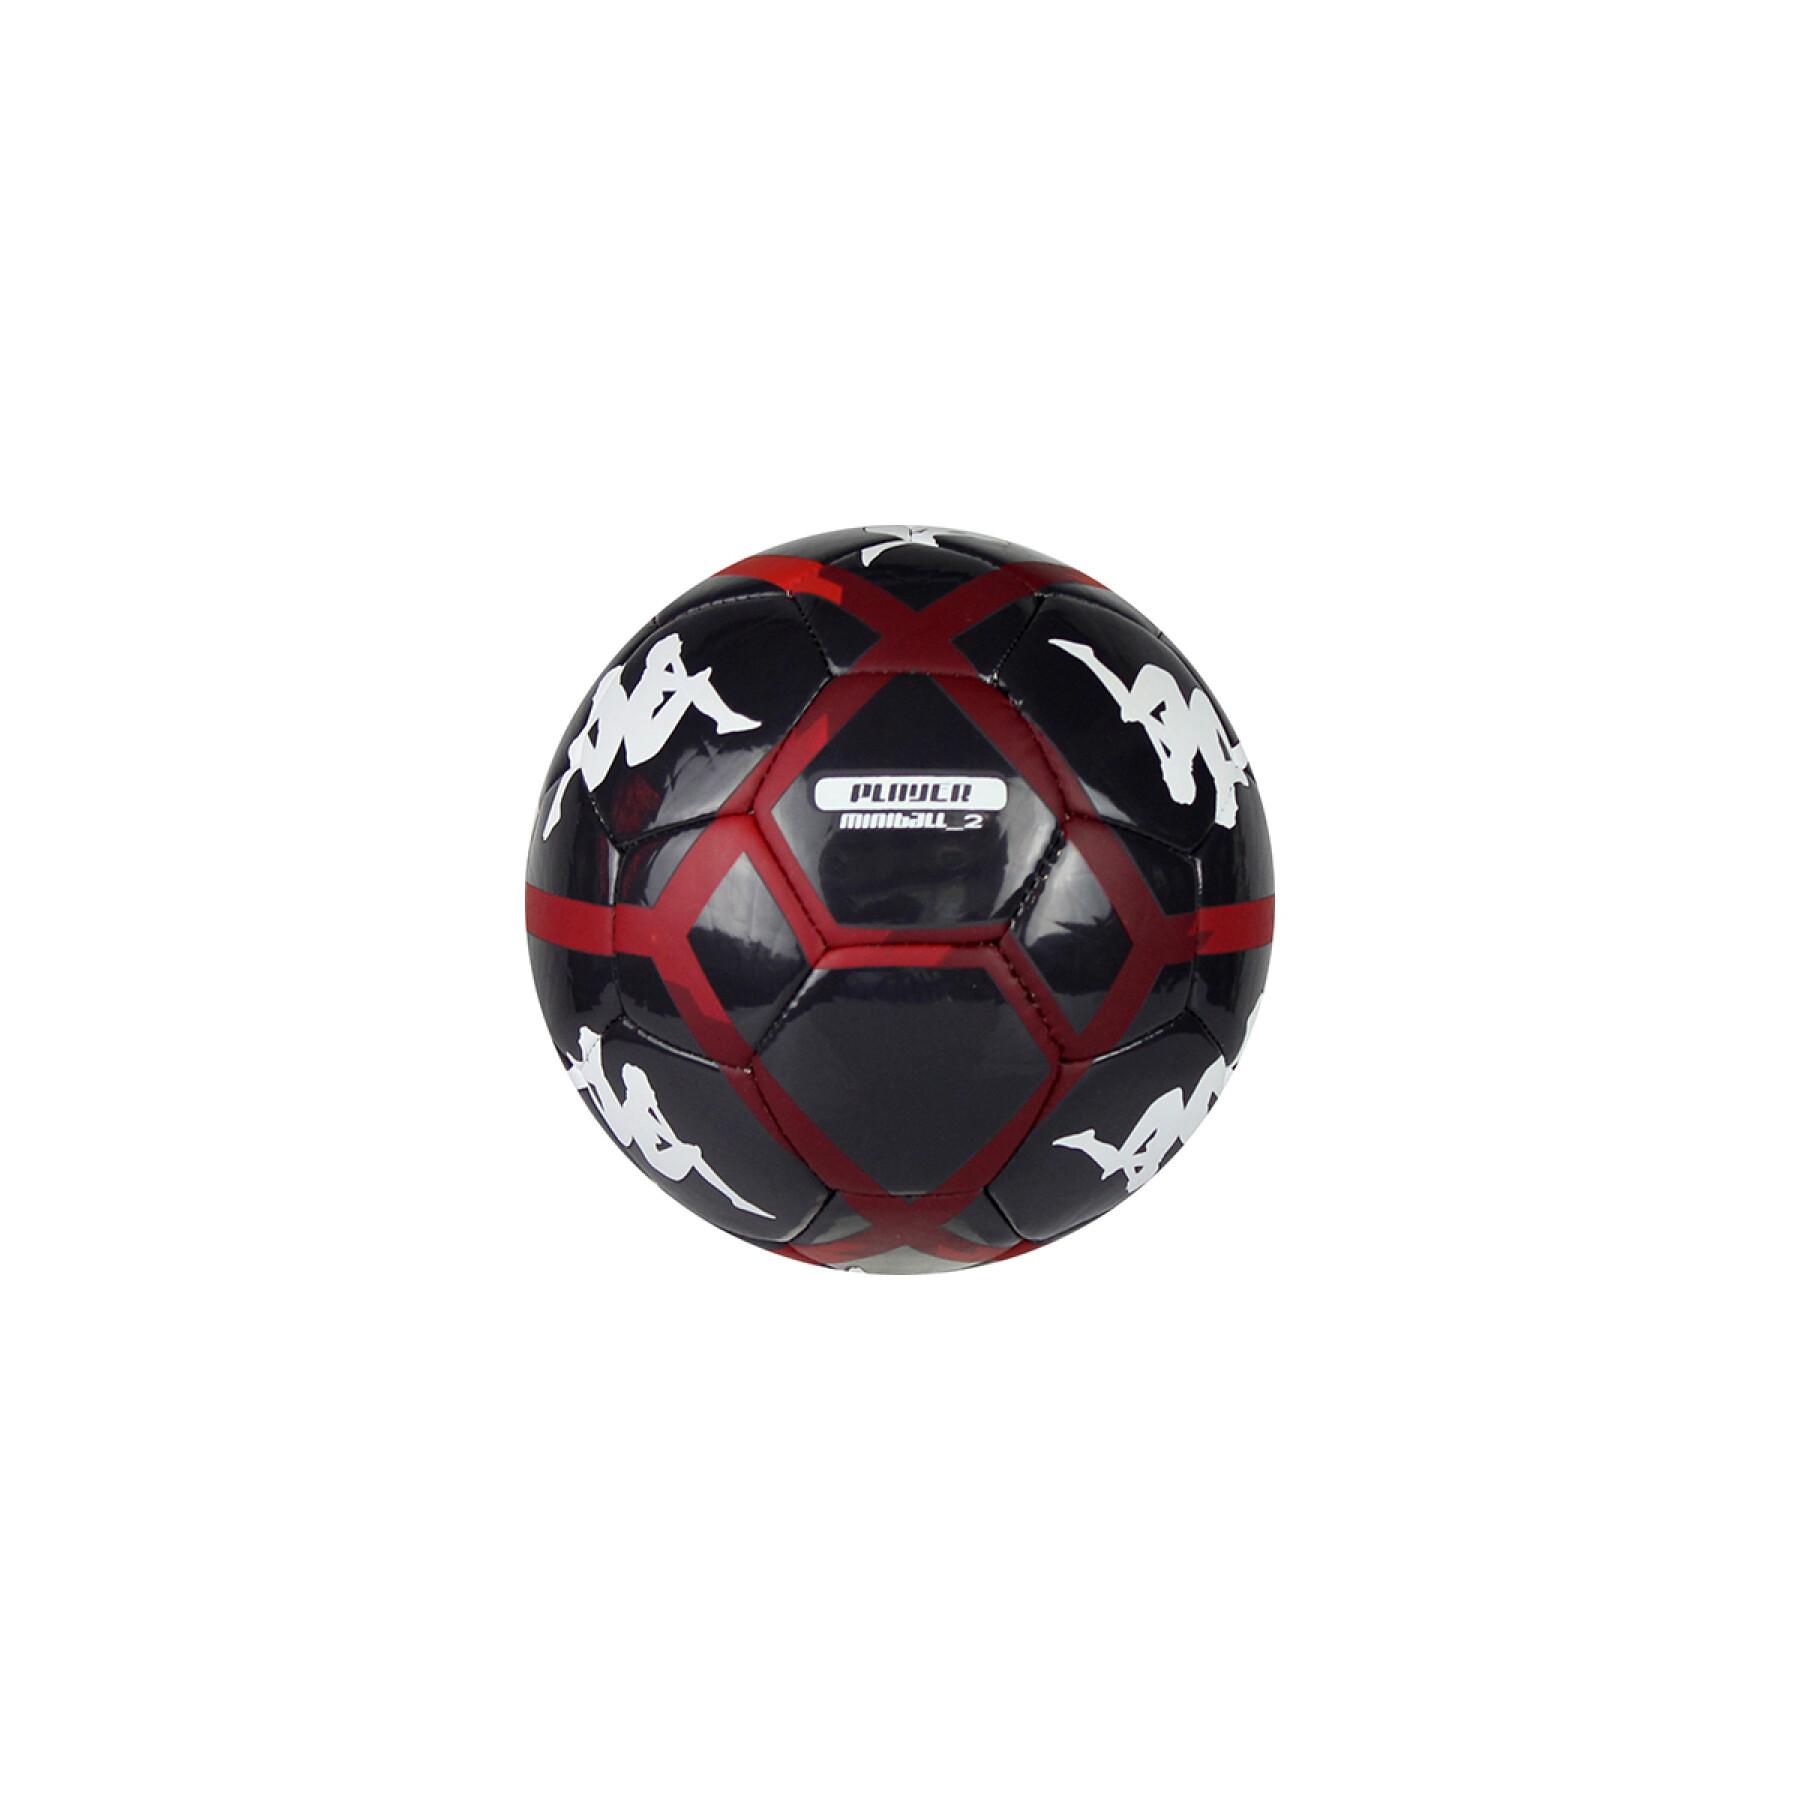 Mini-ballon AS Monaco 2021/22 player